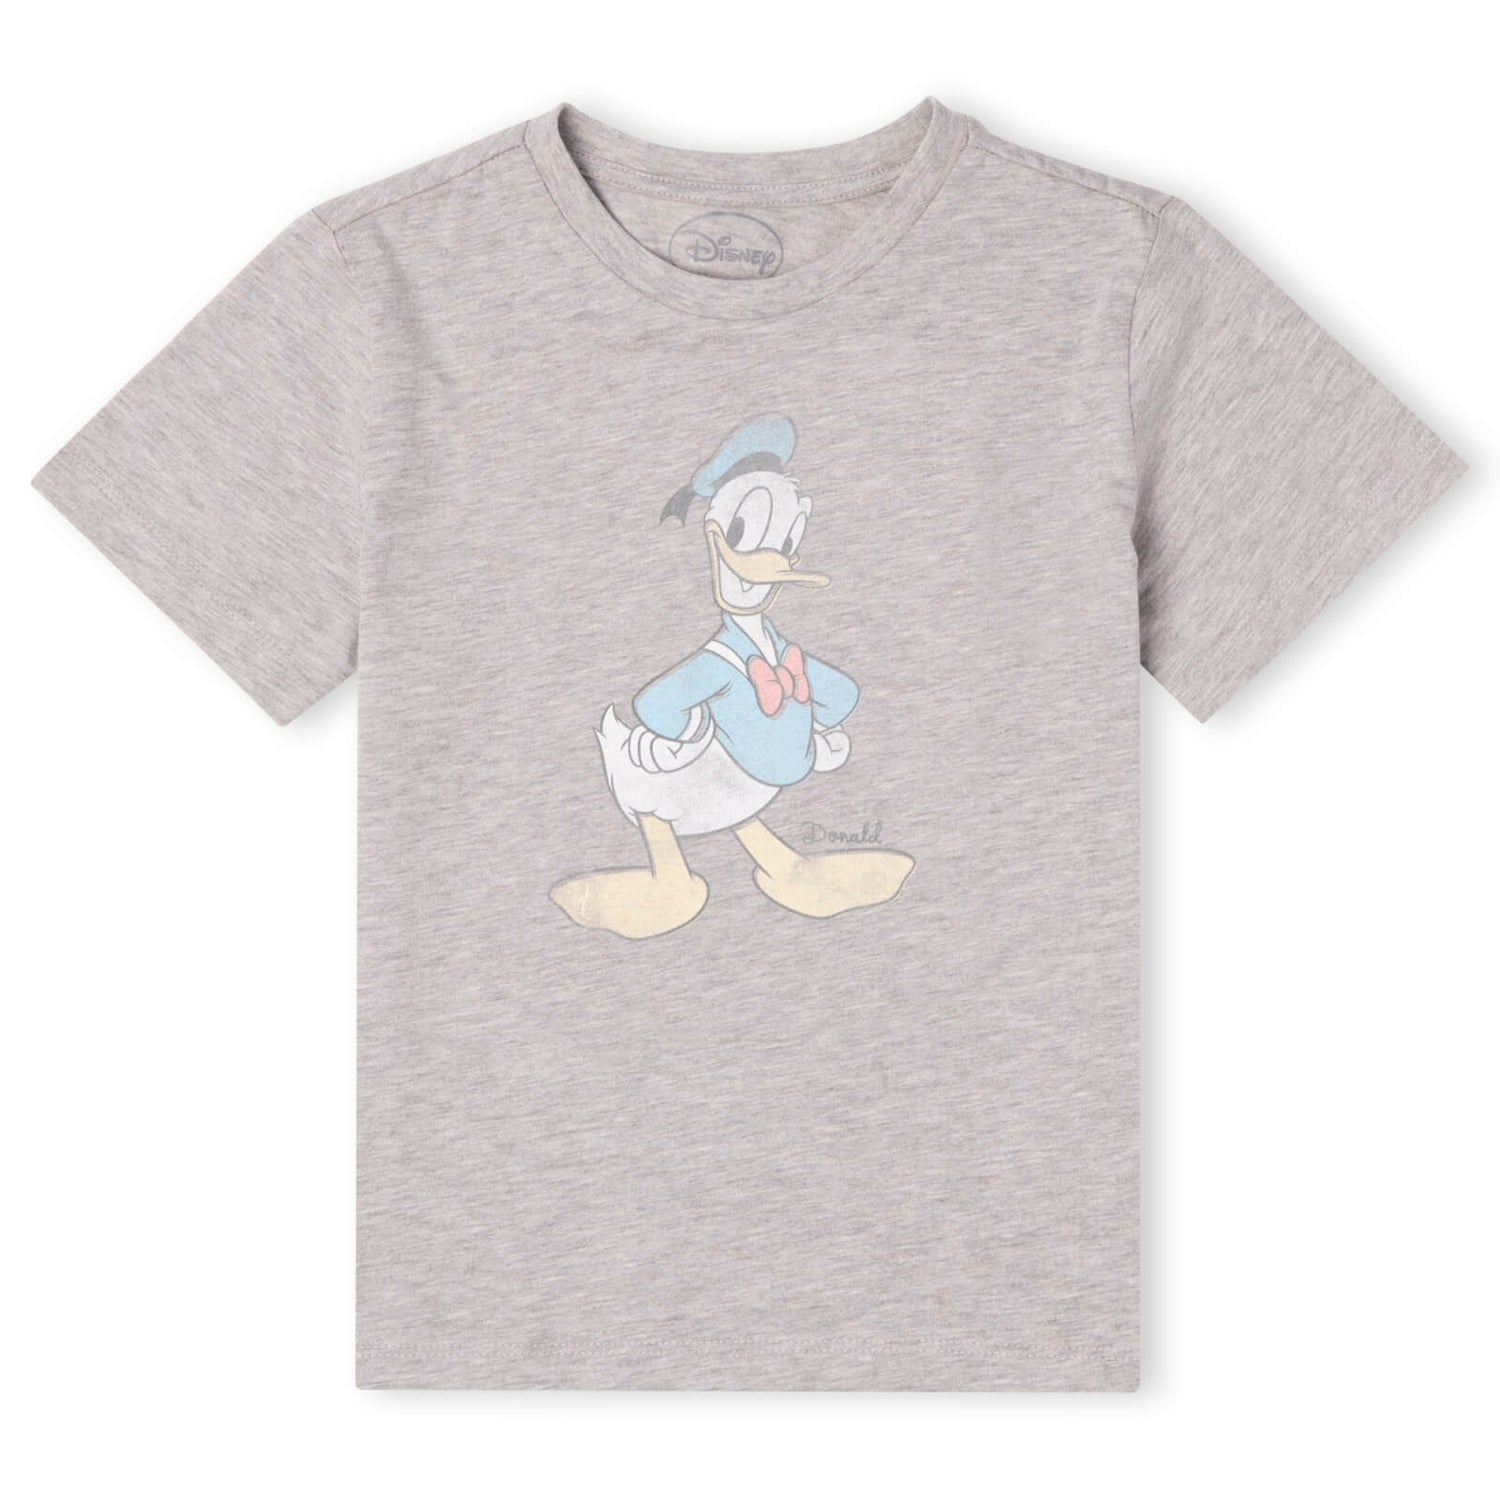 Disney Donald Duck Classic Kids' T-Shirt - Grey